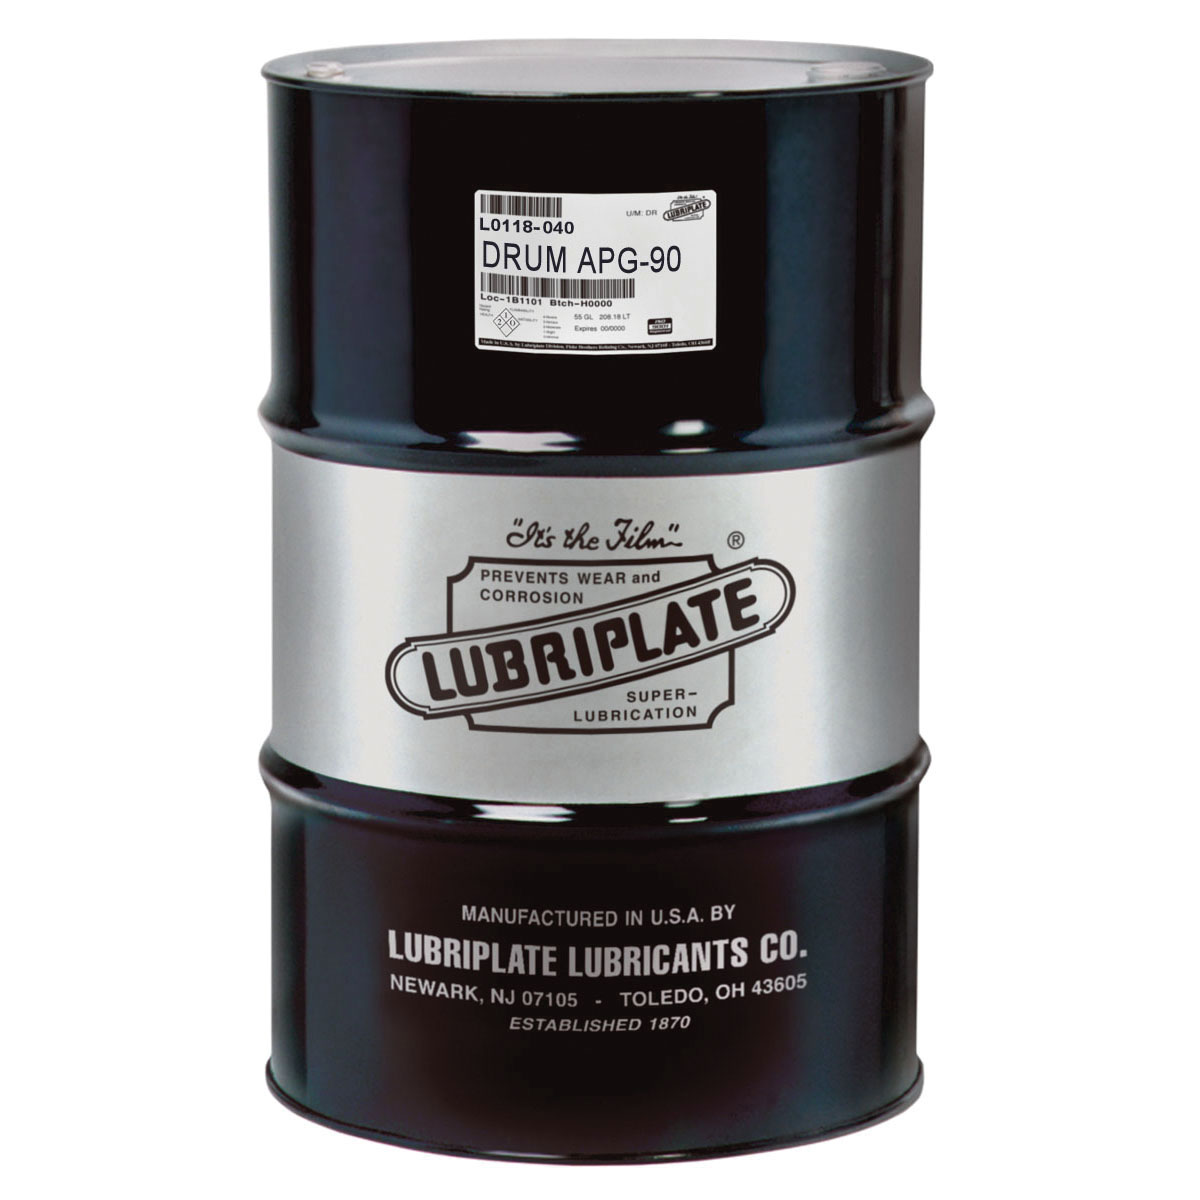 Lubriplate® L0118-040 APG-90 Petroleum Based Gear Oil, 415 lb Drum, Additive Odor/Scent, Liquid Form, ISO 150/220/SAE 85W-90 Grade, Amber